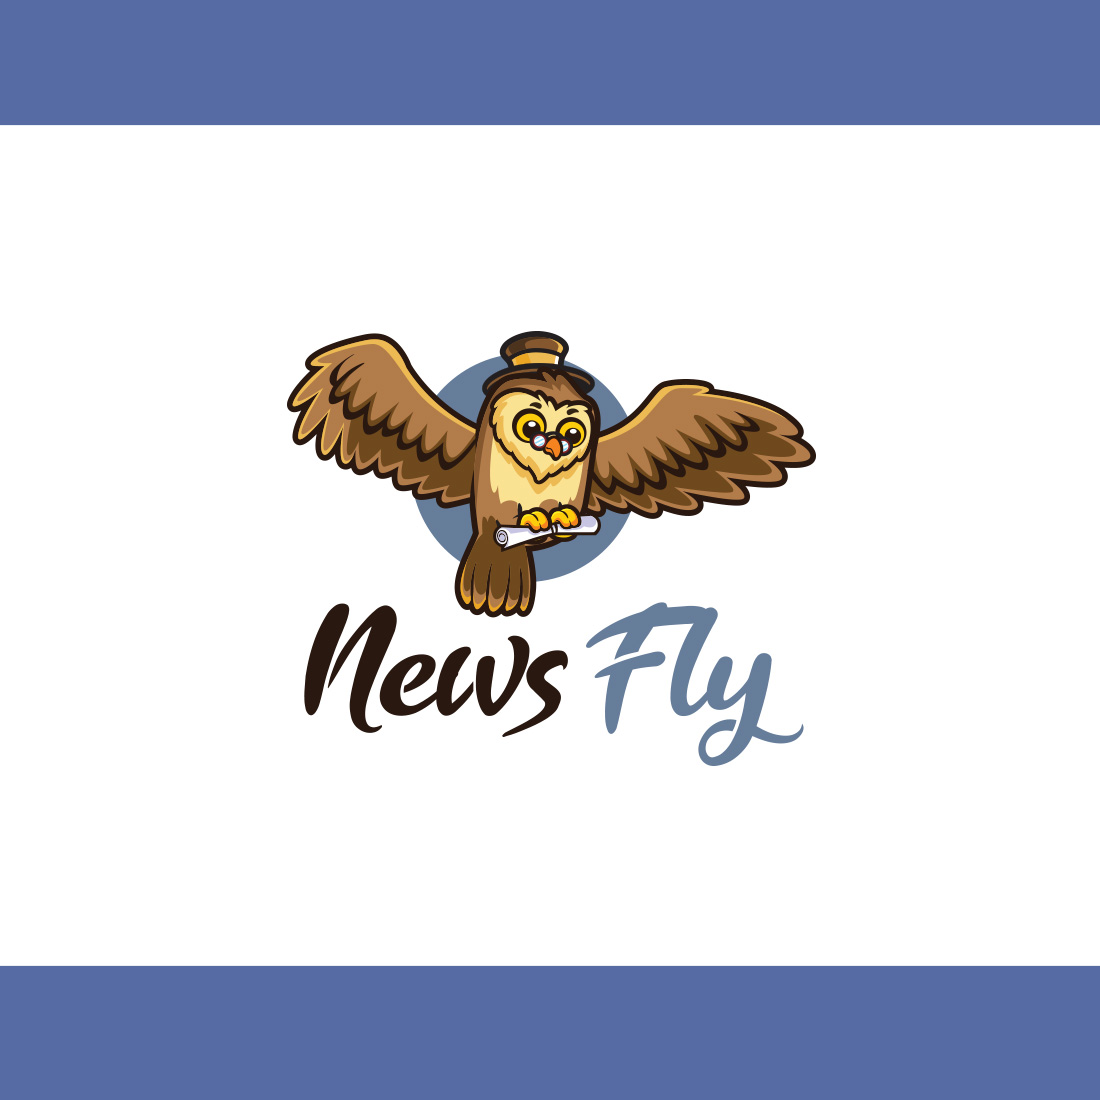 News Fly Logo Design cover image.